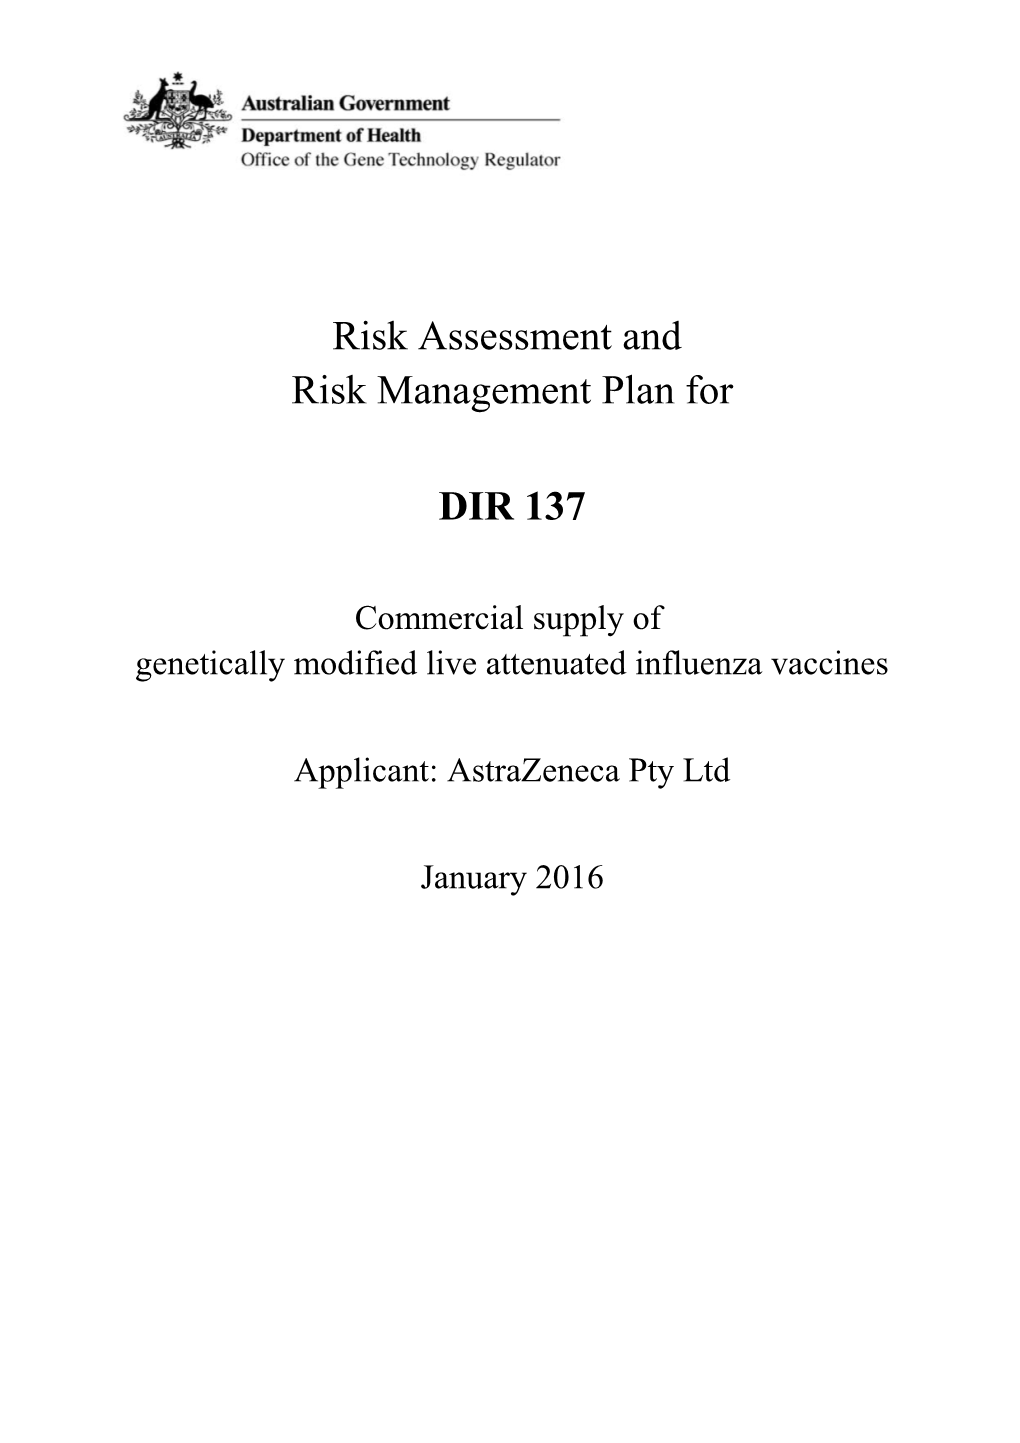 Risk Assessment and Risk Management Plan For